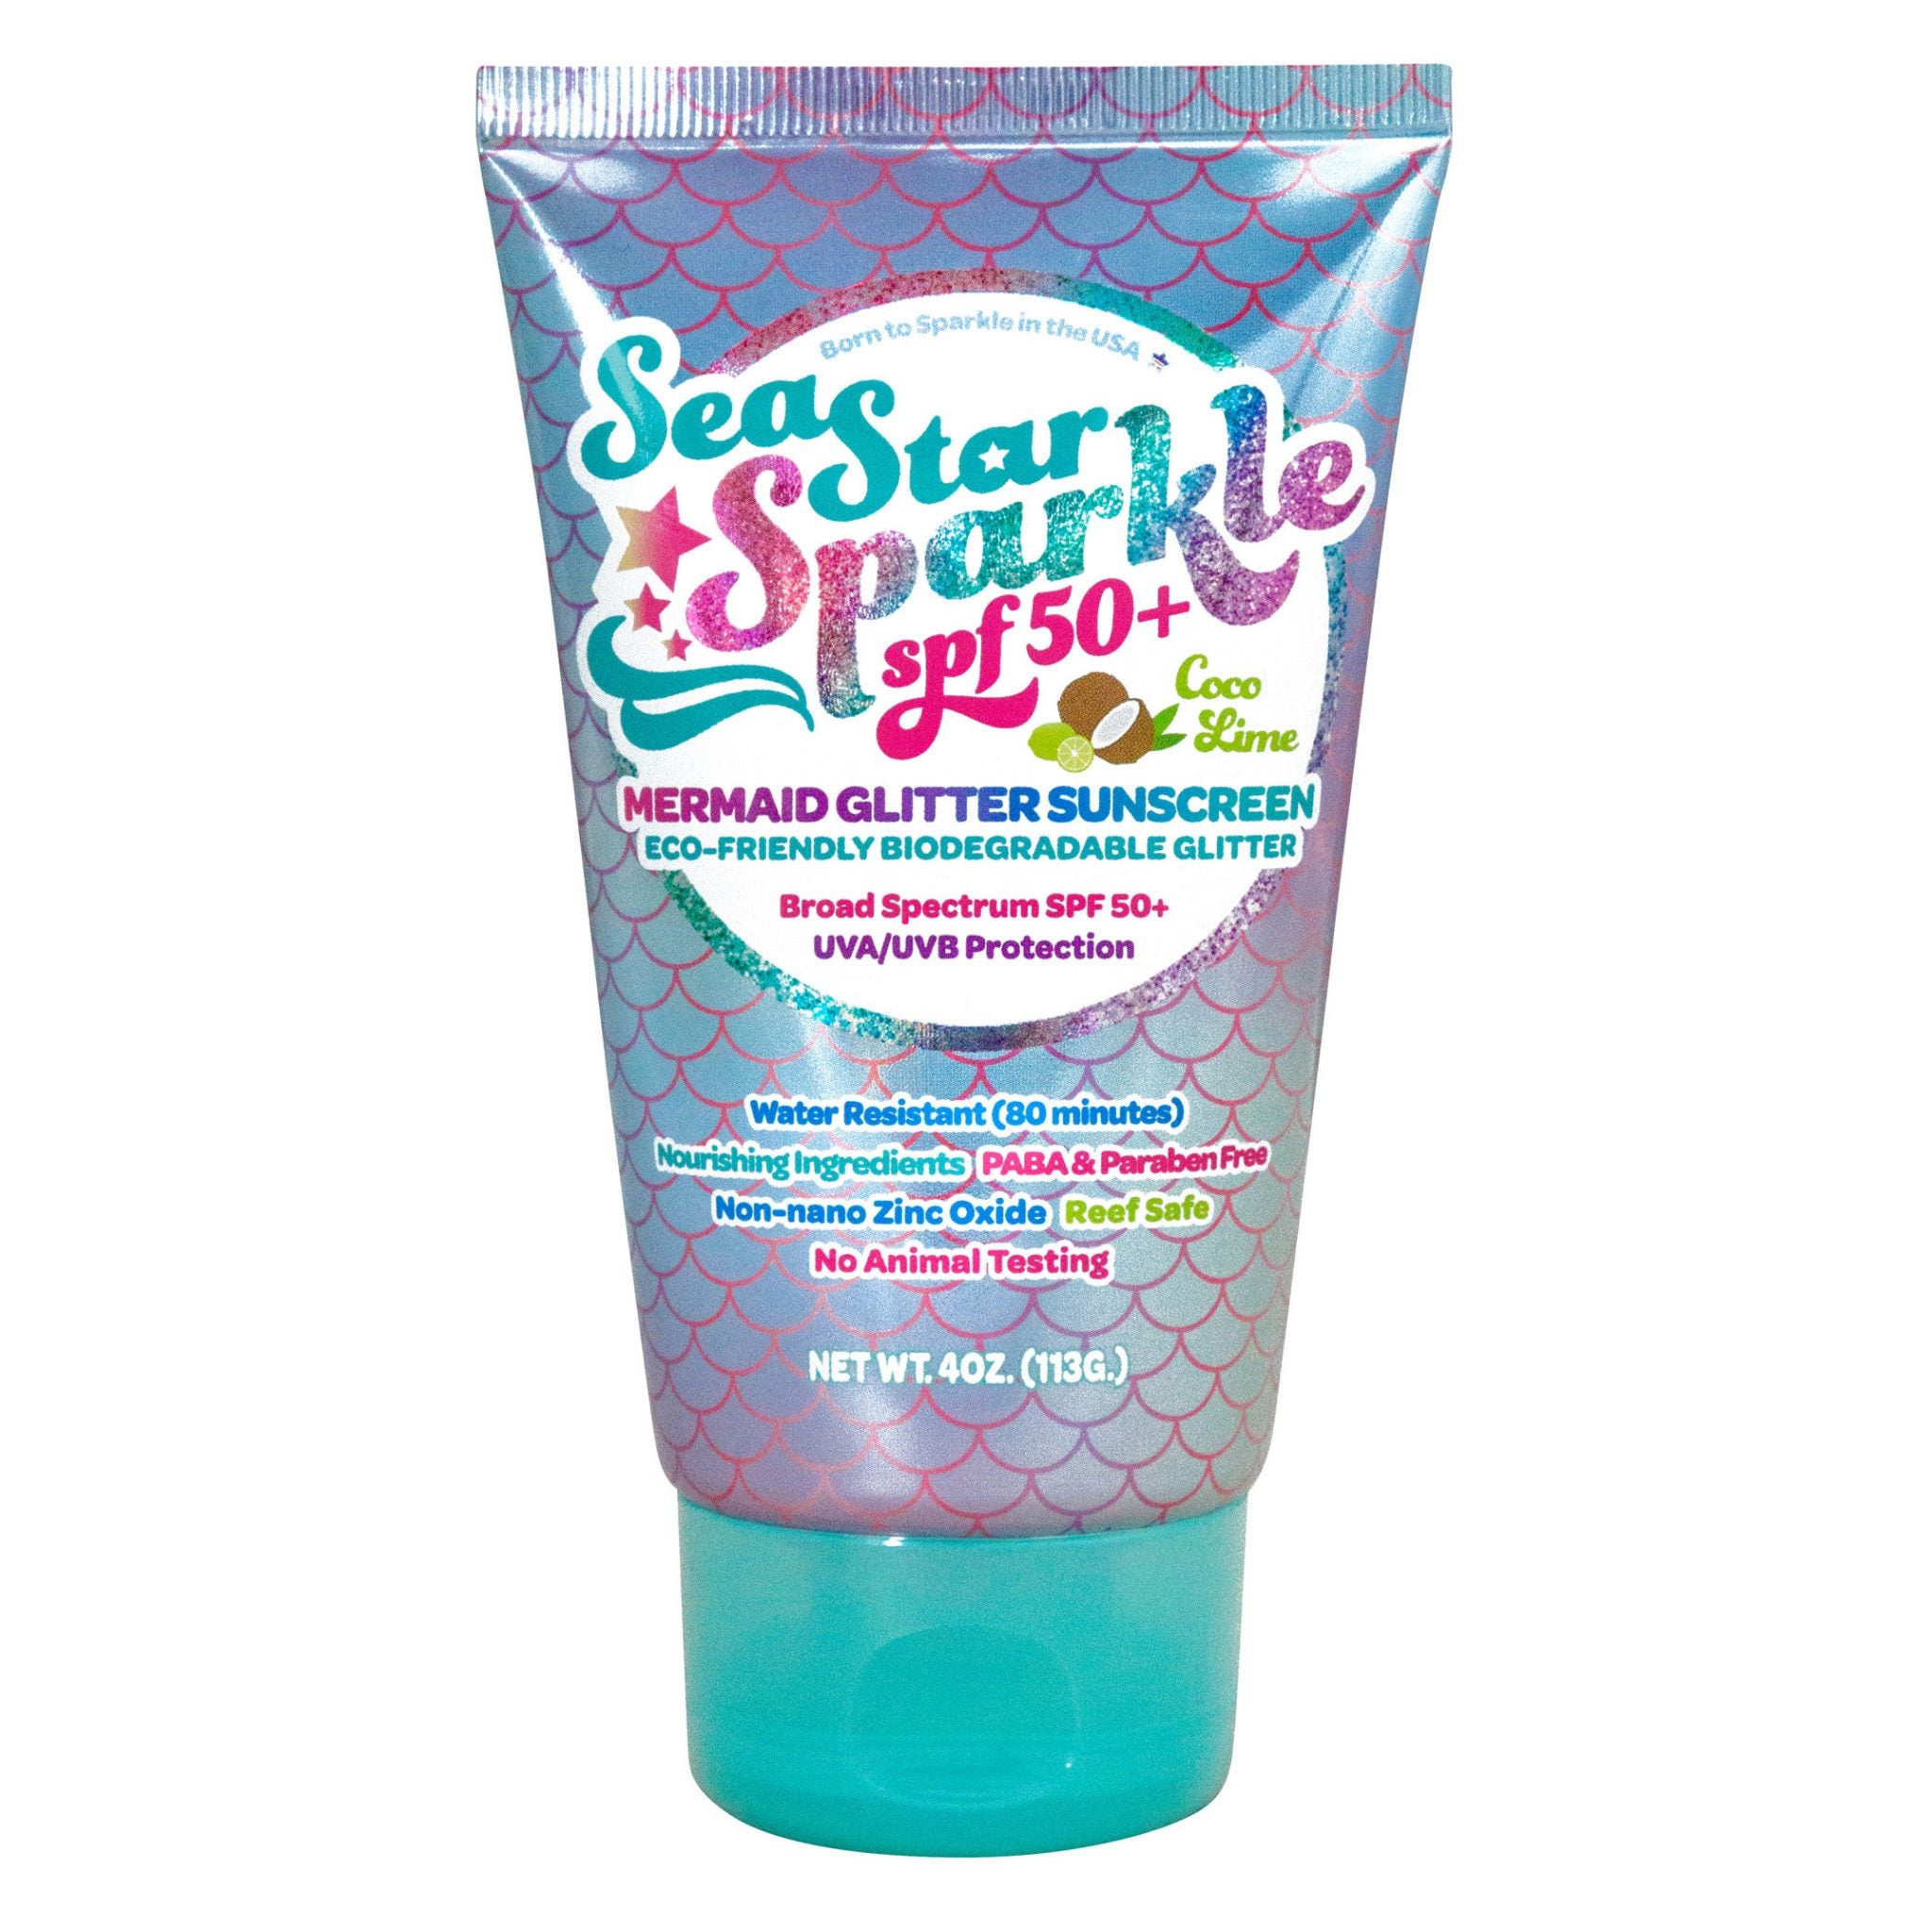 Sea Star Sparkle Glitter Sunscreen - SPF 50+